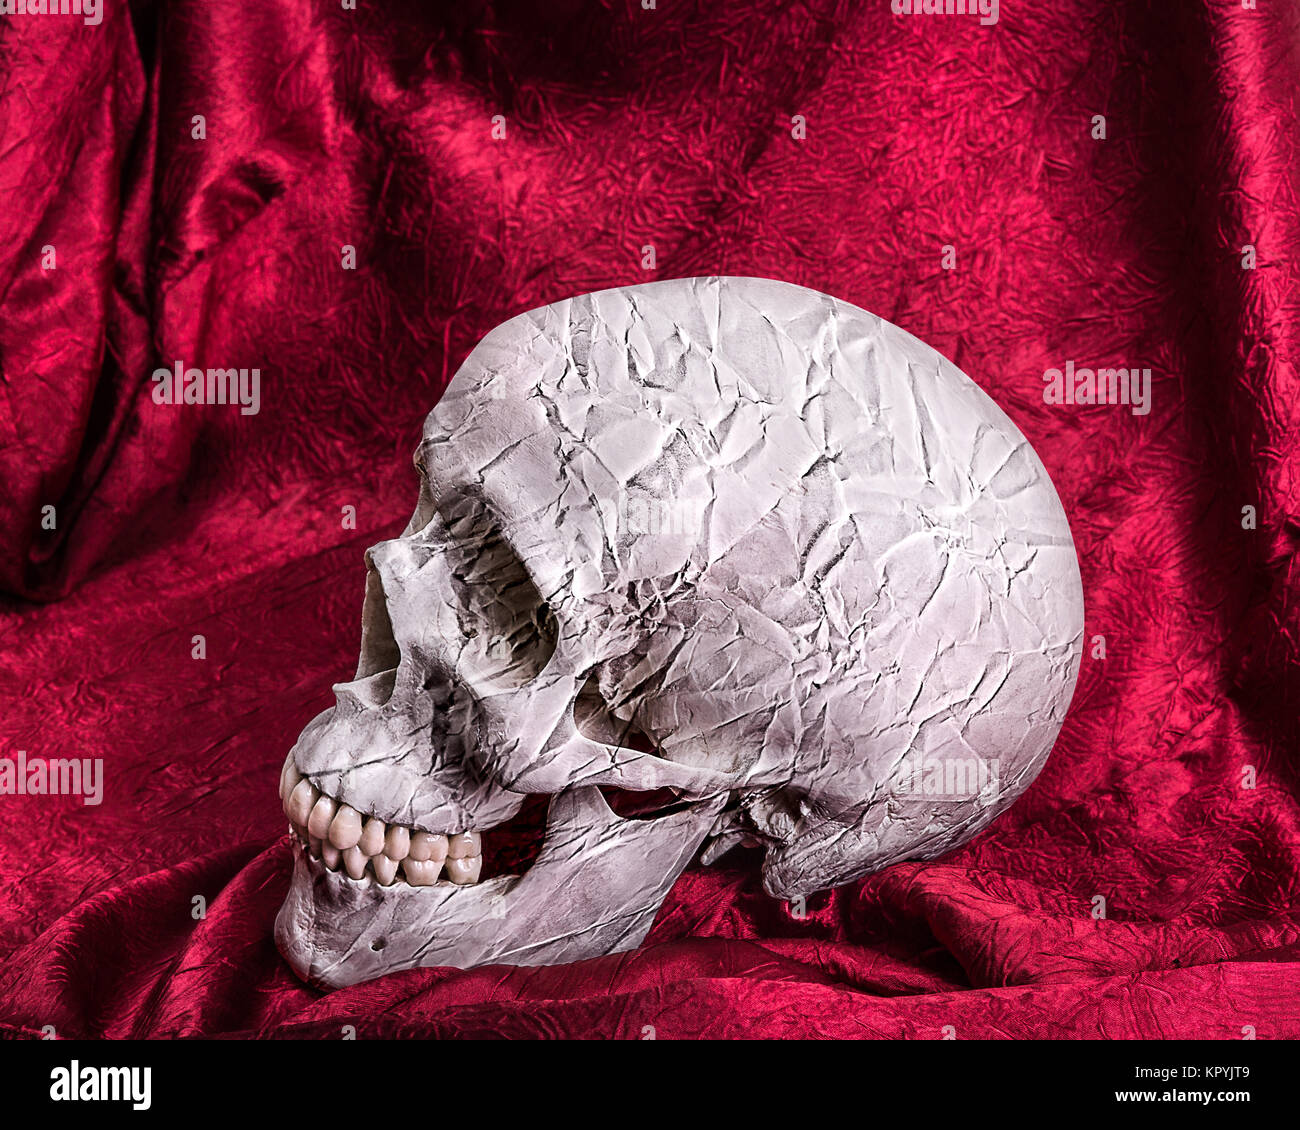 Textured skull lying on red shiny fabric. Stock Photo